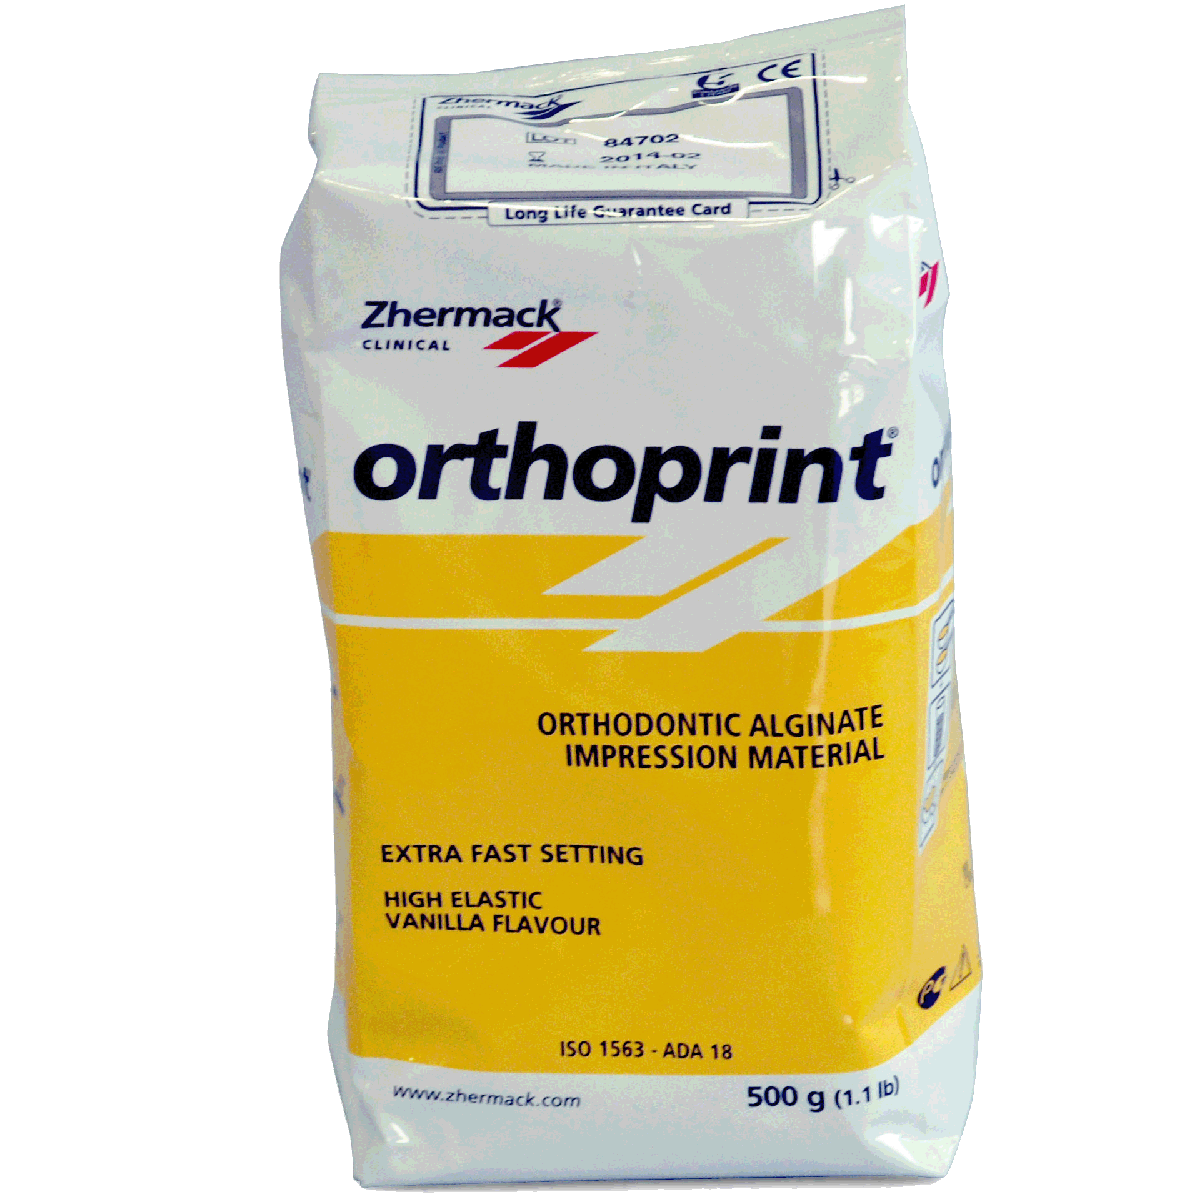 Orthoprint